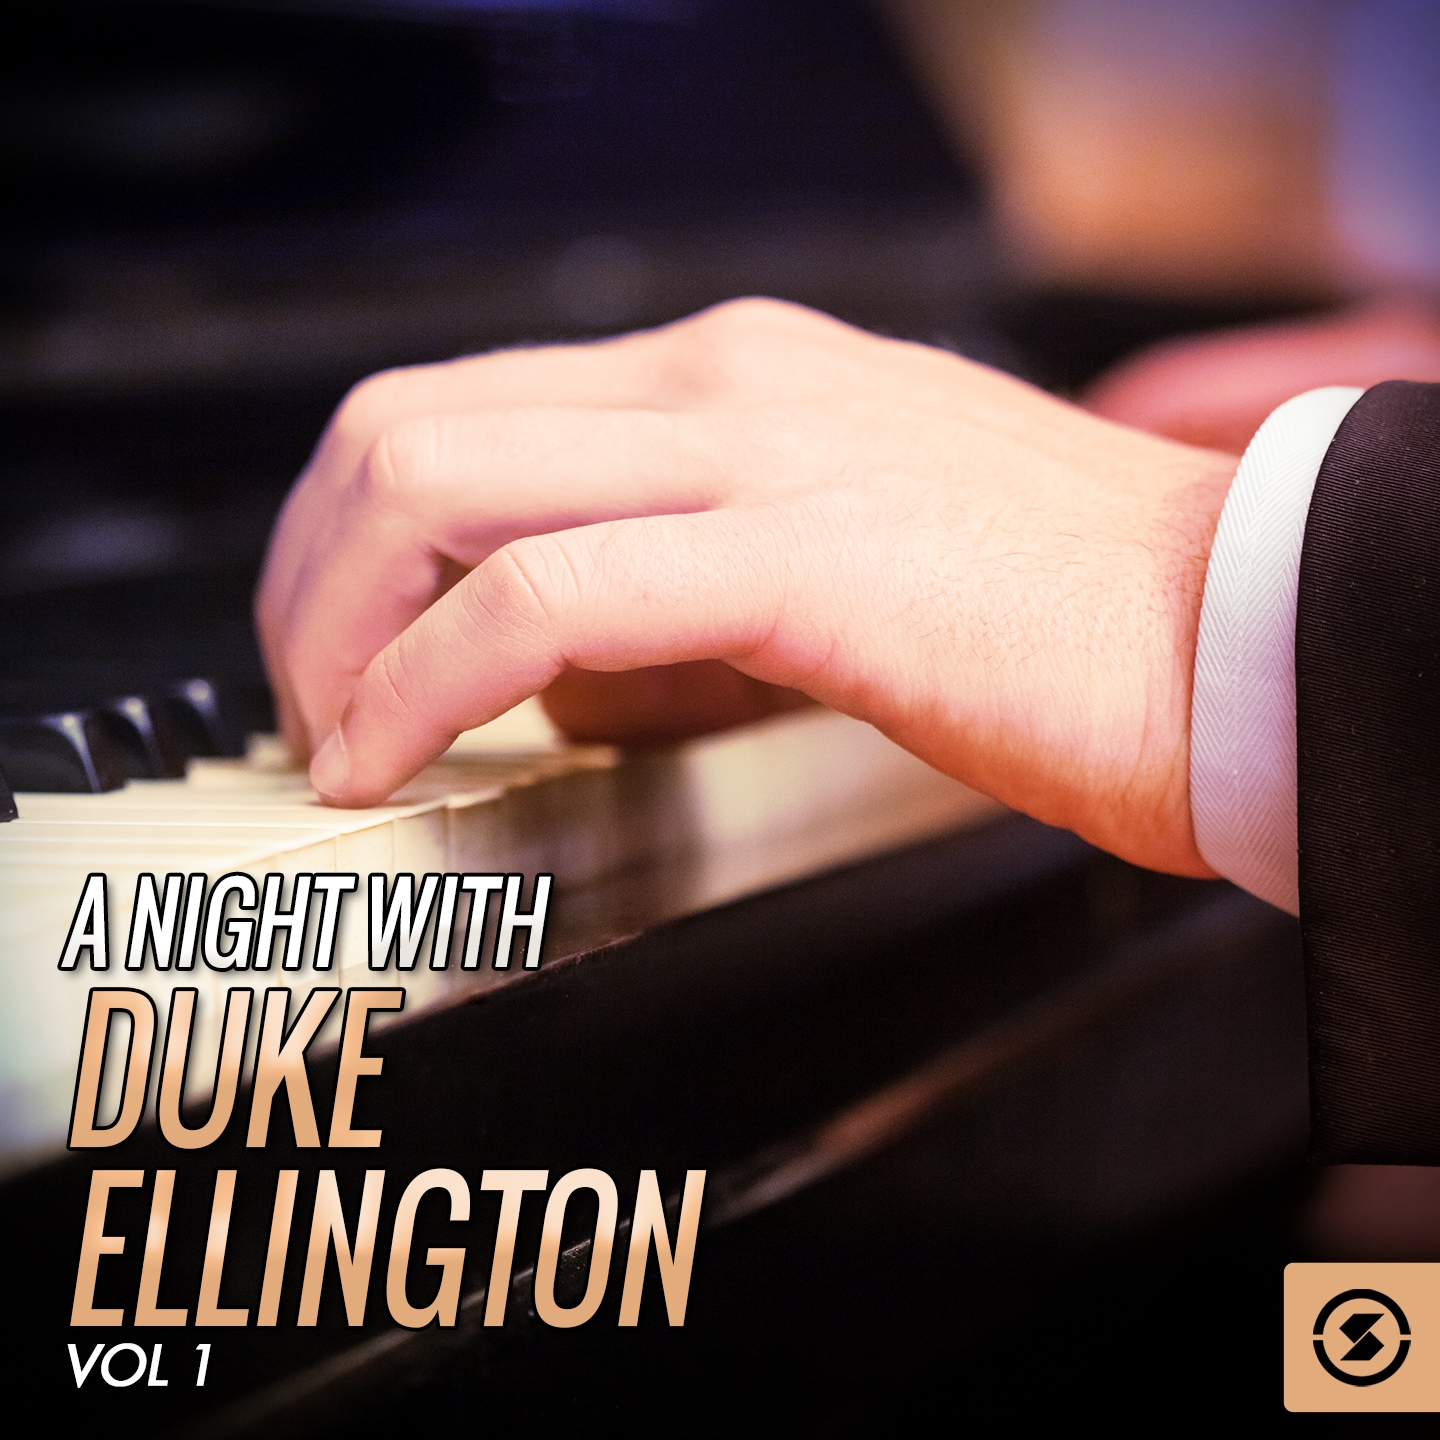 A Night with Duke Ellington, Vol. 1